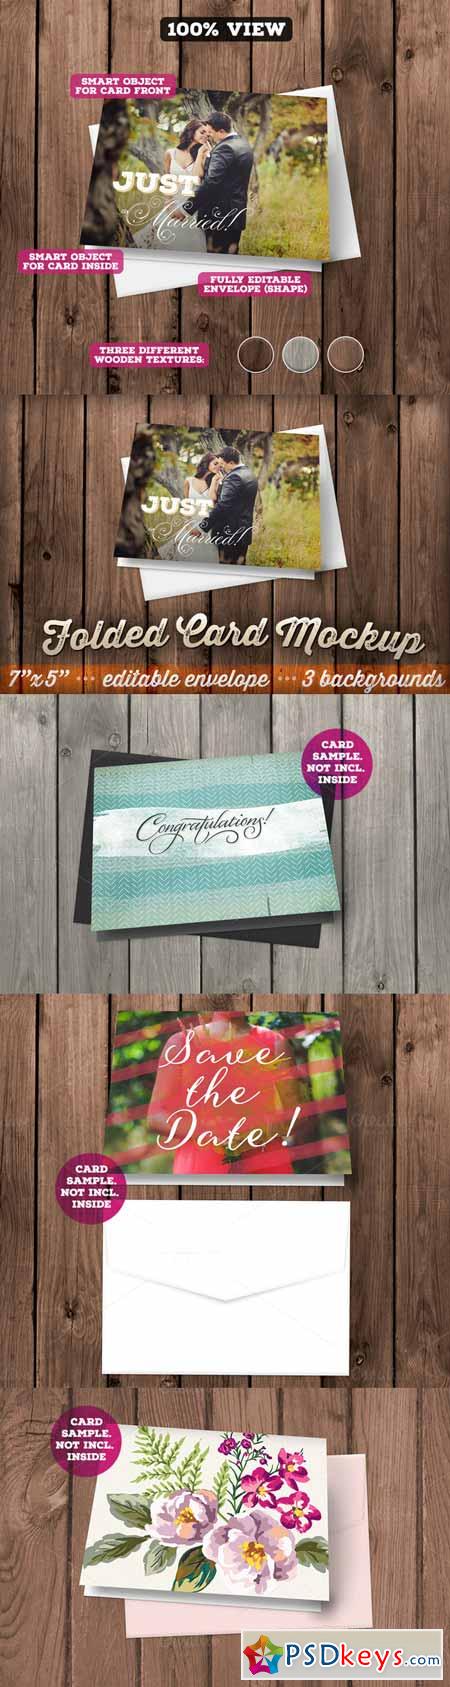 Folded Card Mockup w Envelope 149052